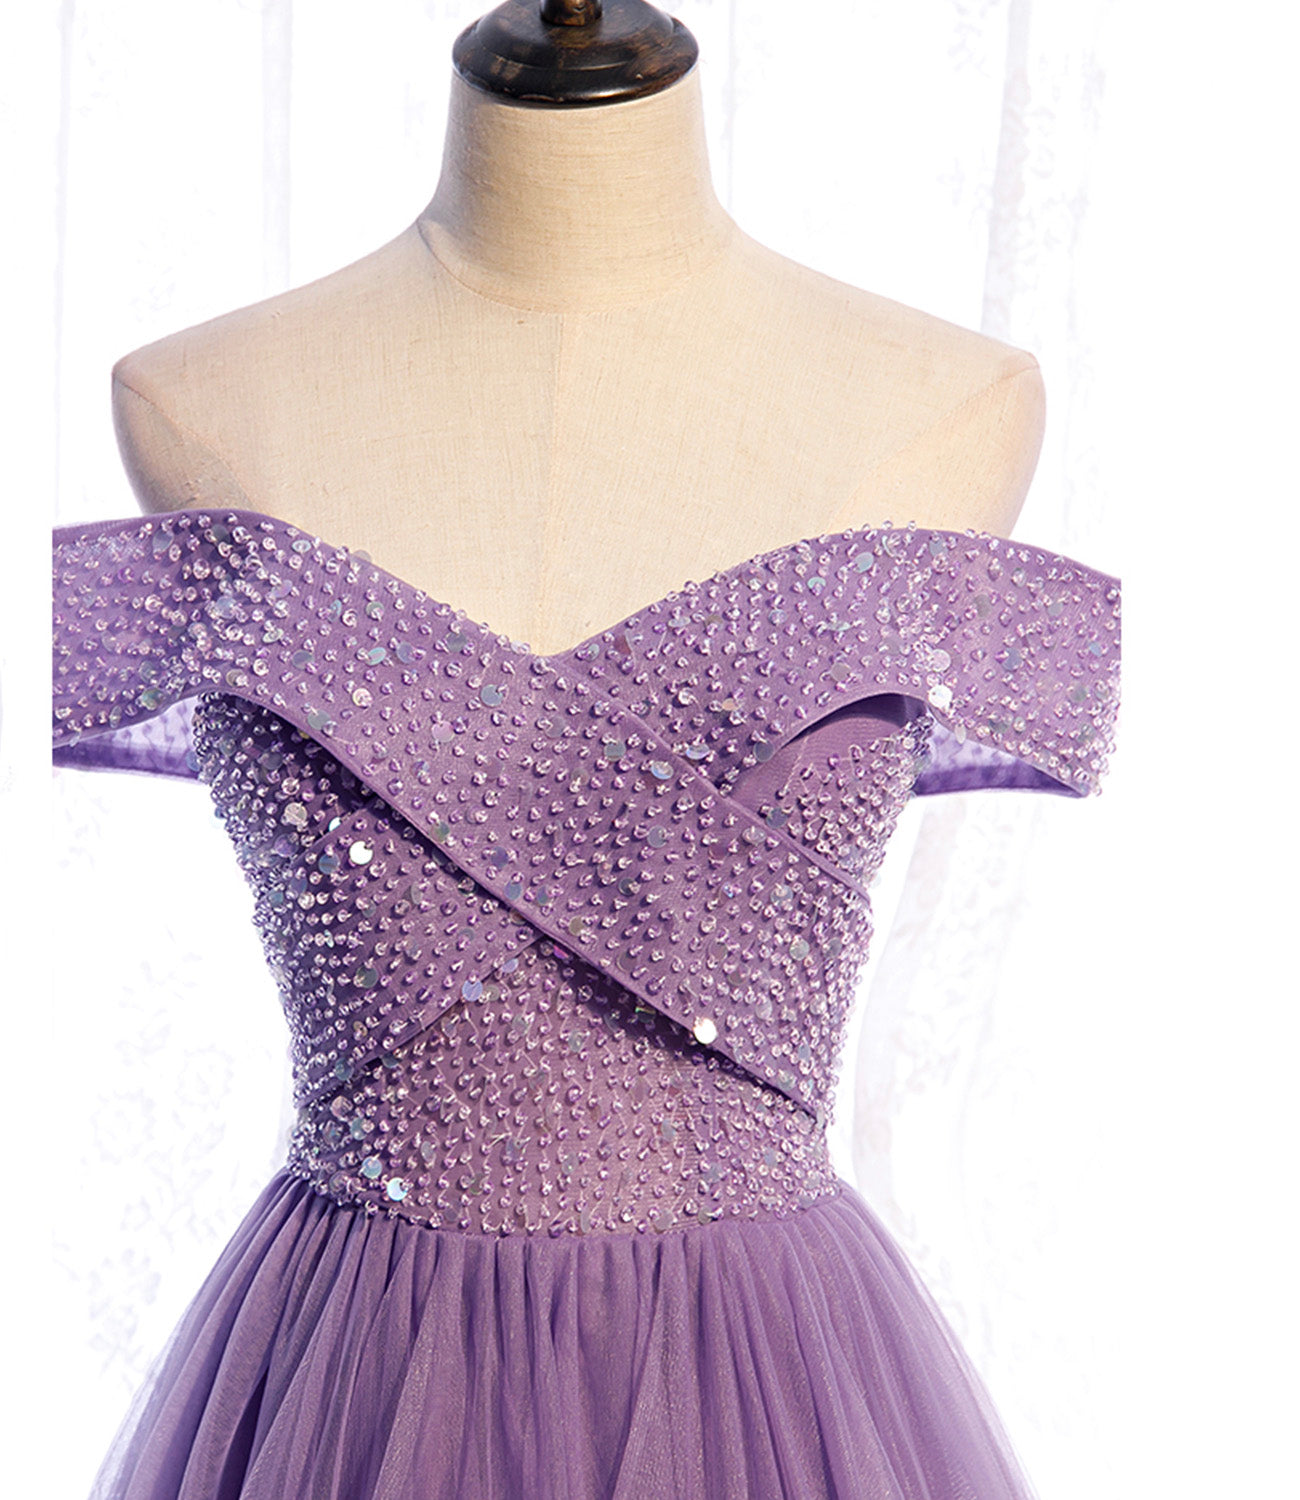 Purple tulle beads long A line prom dress evening dress  8790